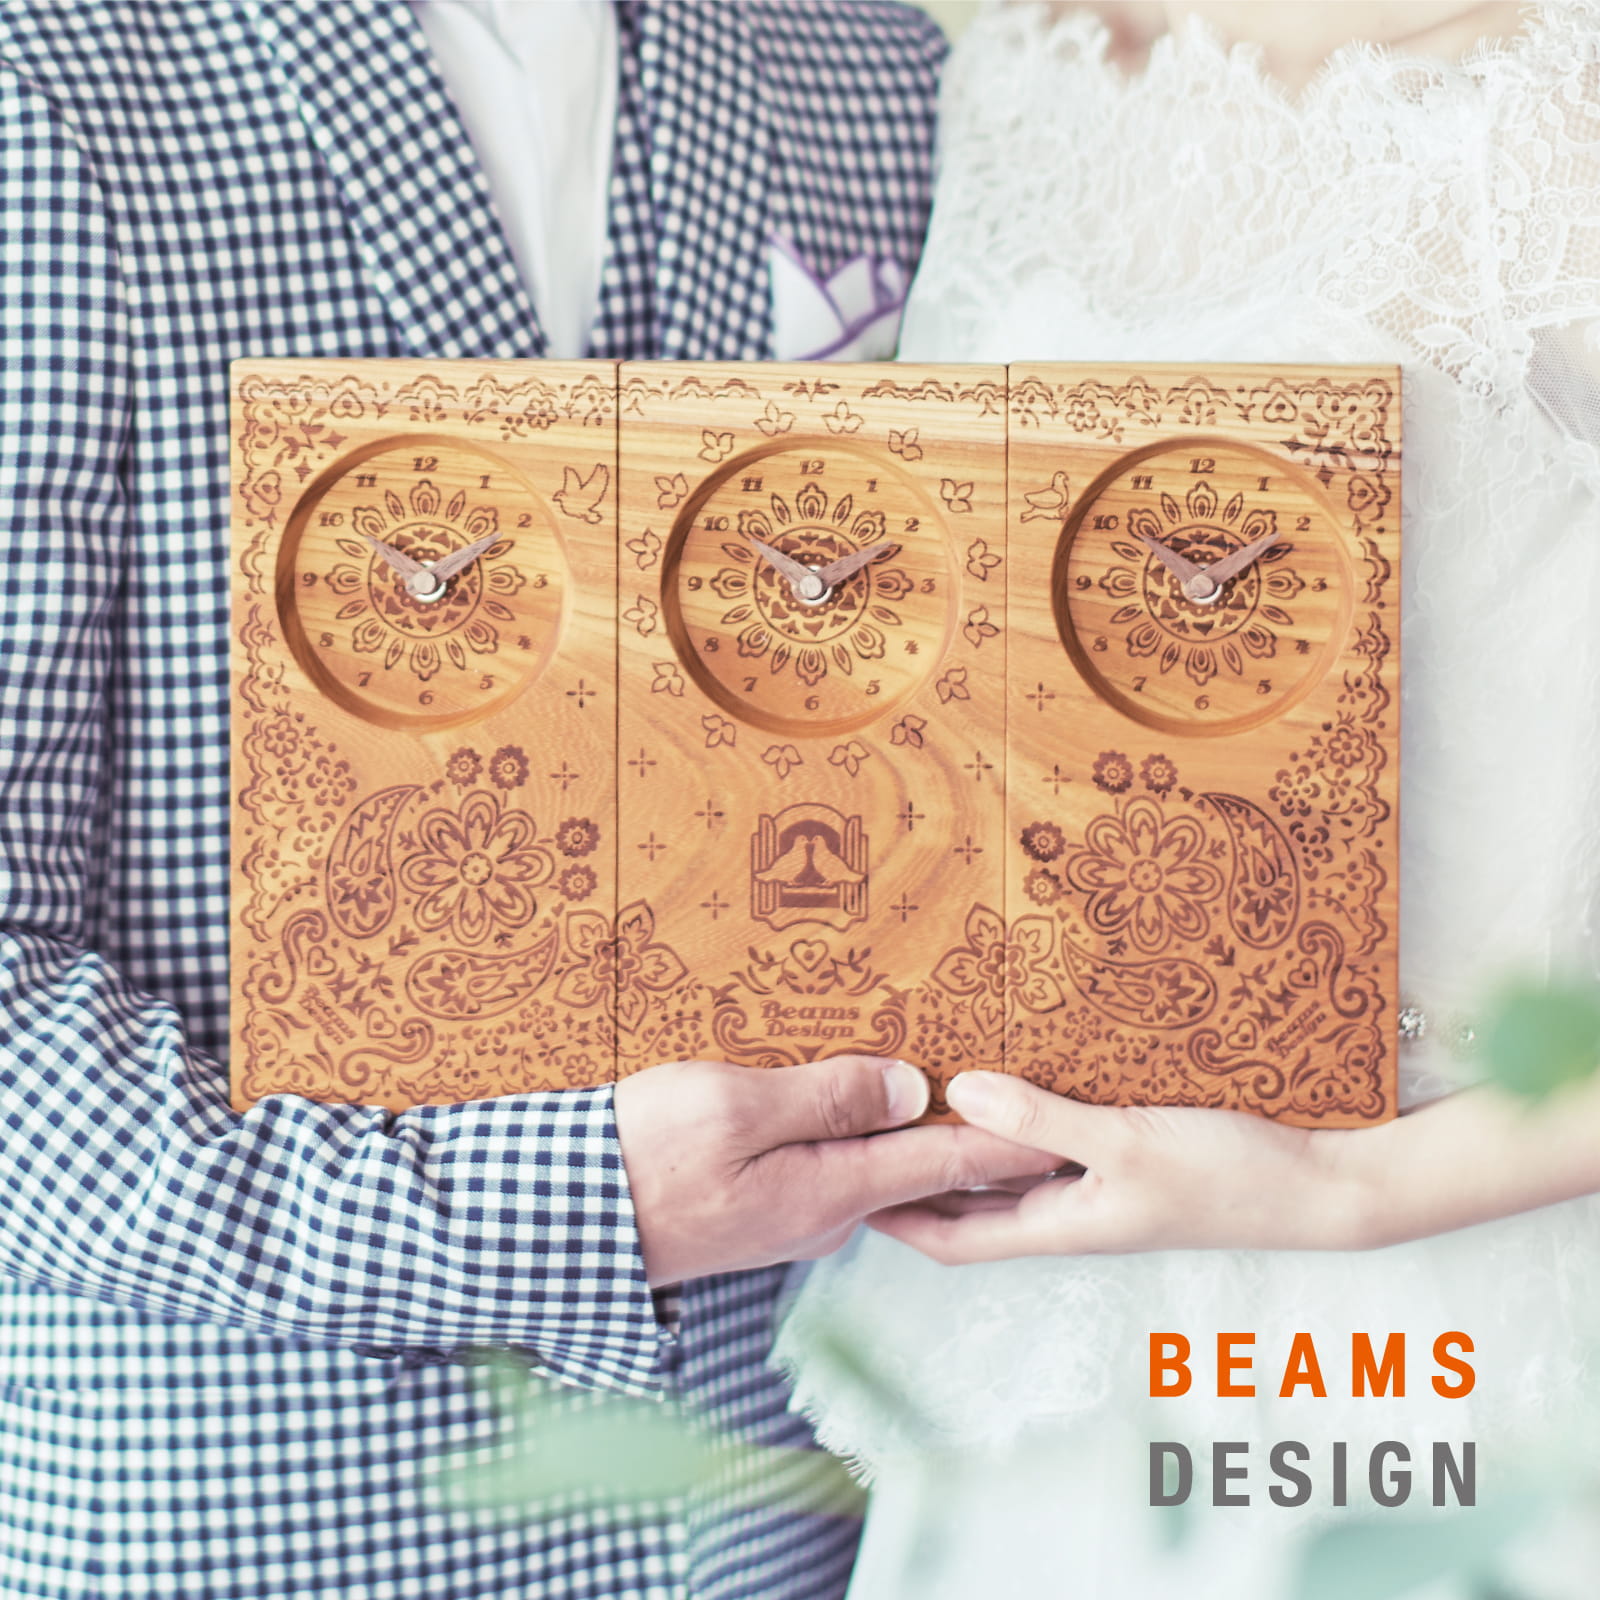 【BEAMS DESIGN】ペイズリー柄をアレンジした独自のデザインの三連時計